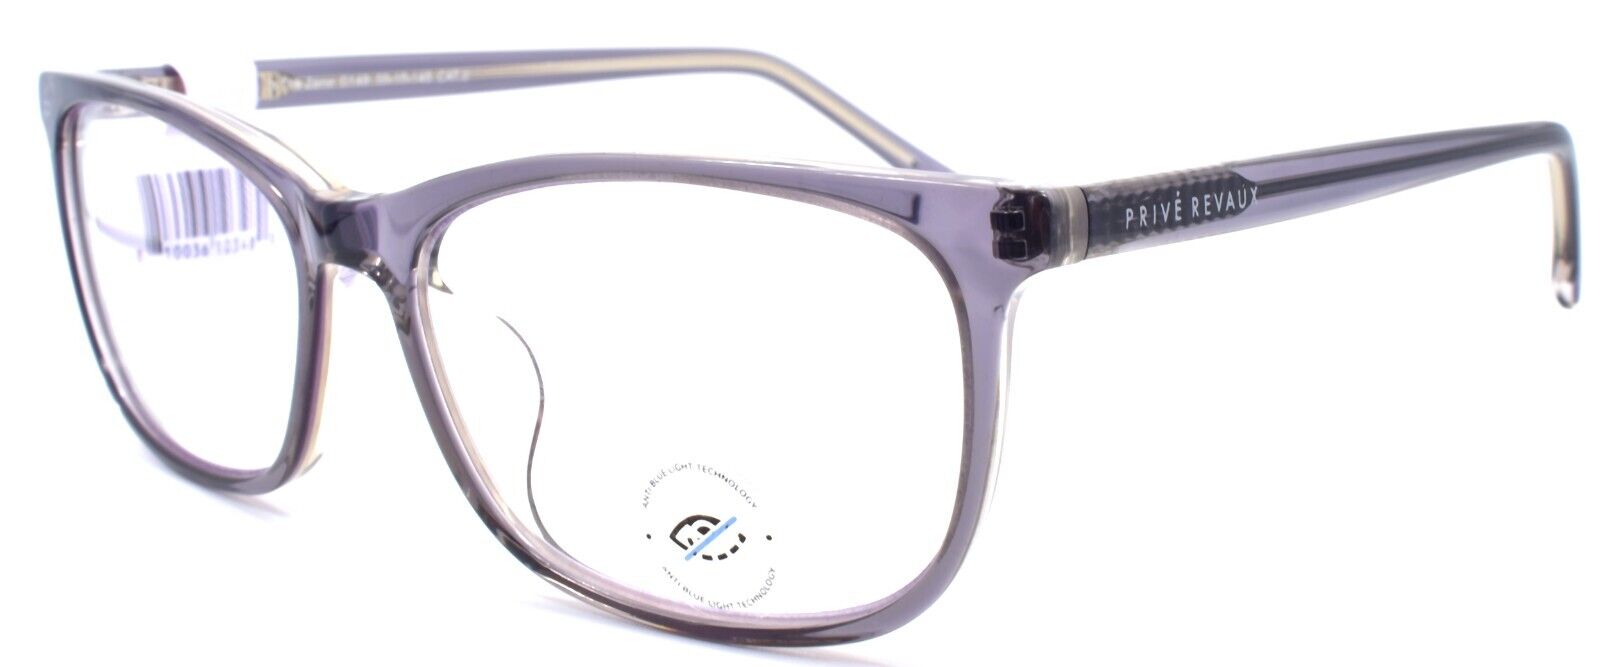 1-Prive Revaux In The Zone Eyeglasses Frames Blue Light Blocking RX-ready Gray-810036103480-IKSpecs